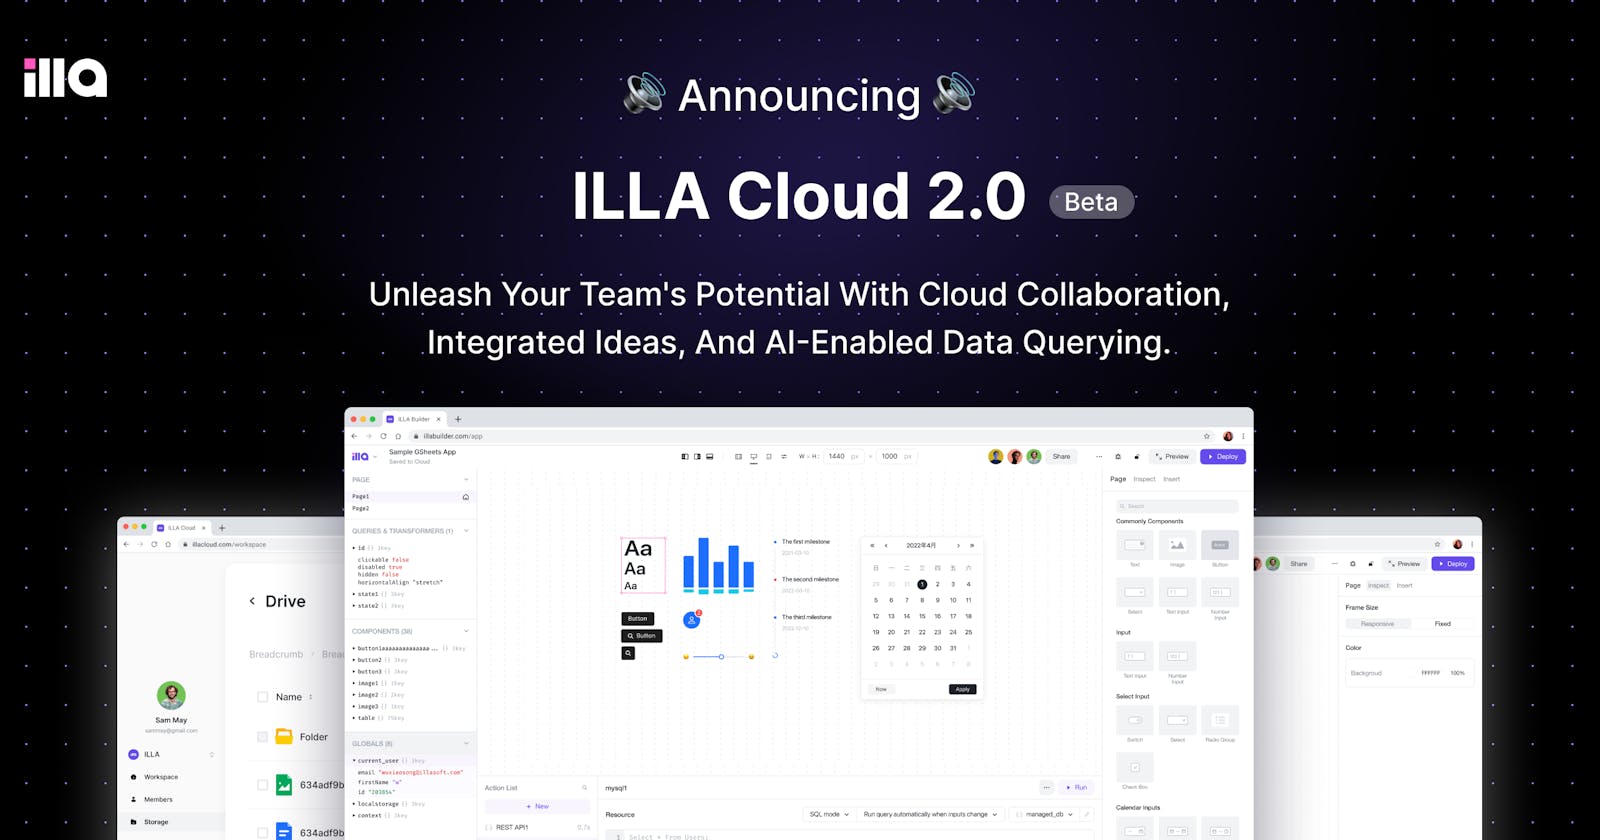 Announcing: ILLA Cloud 2.0